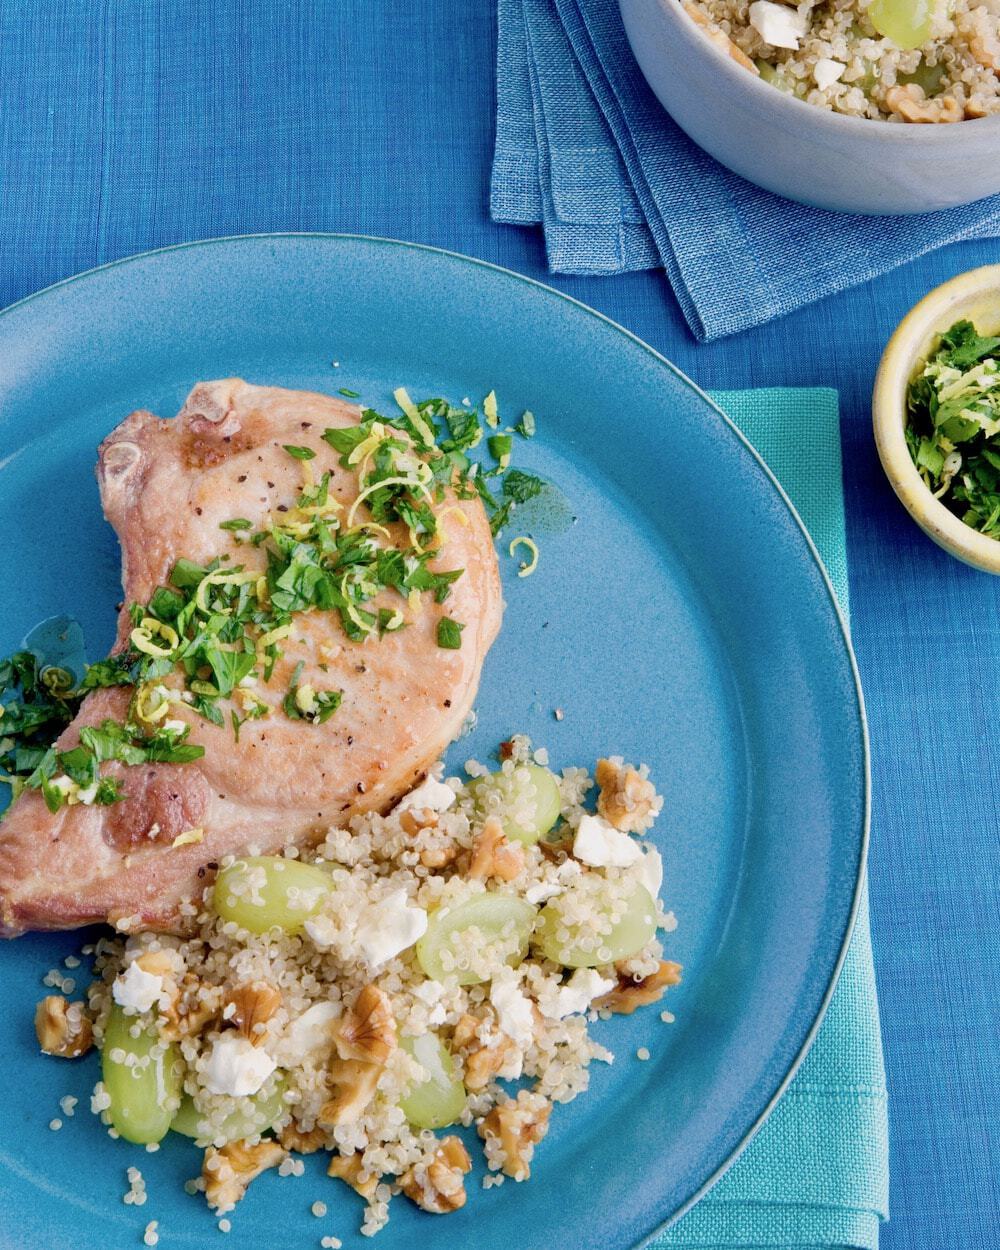 Pork chop dinner with quinoa